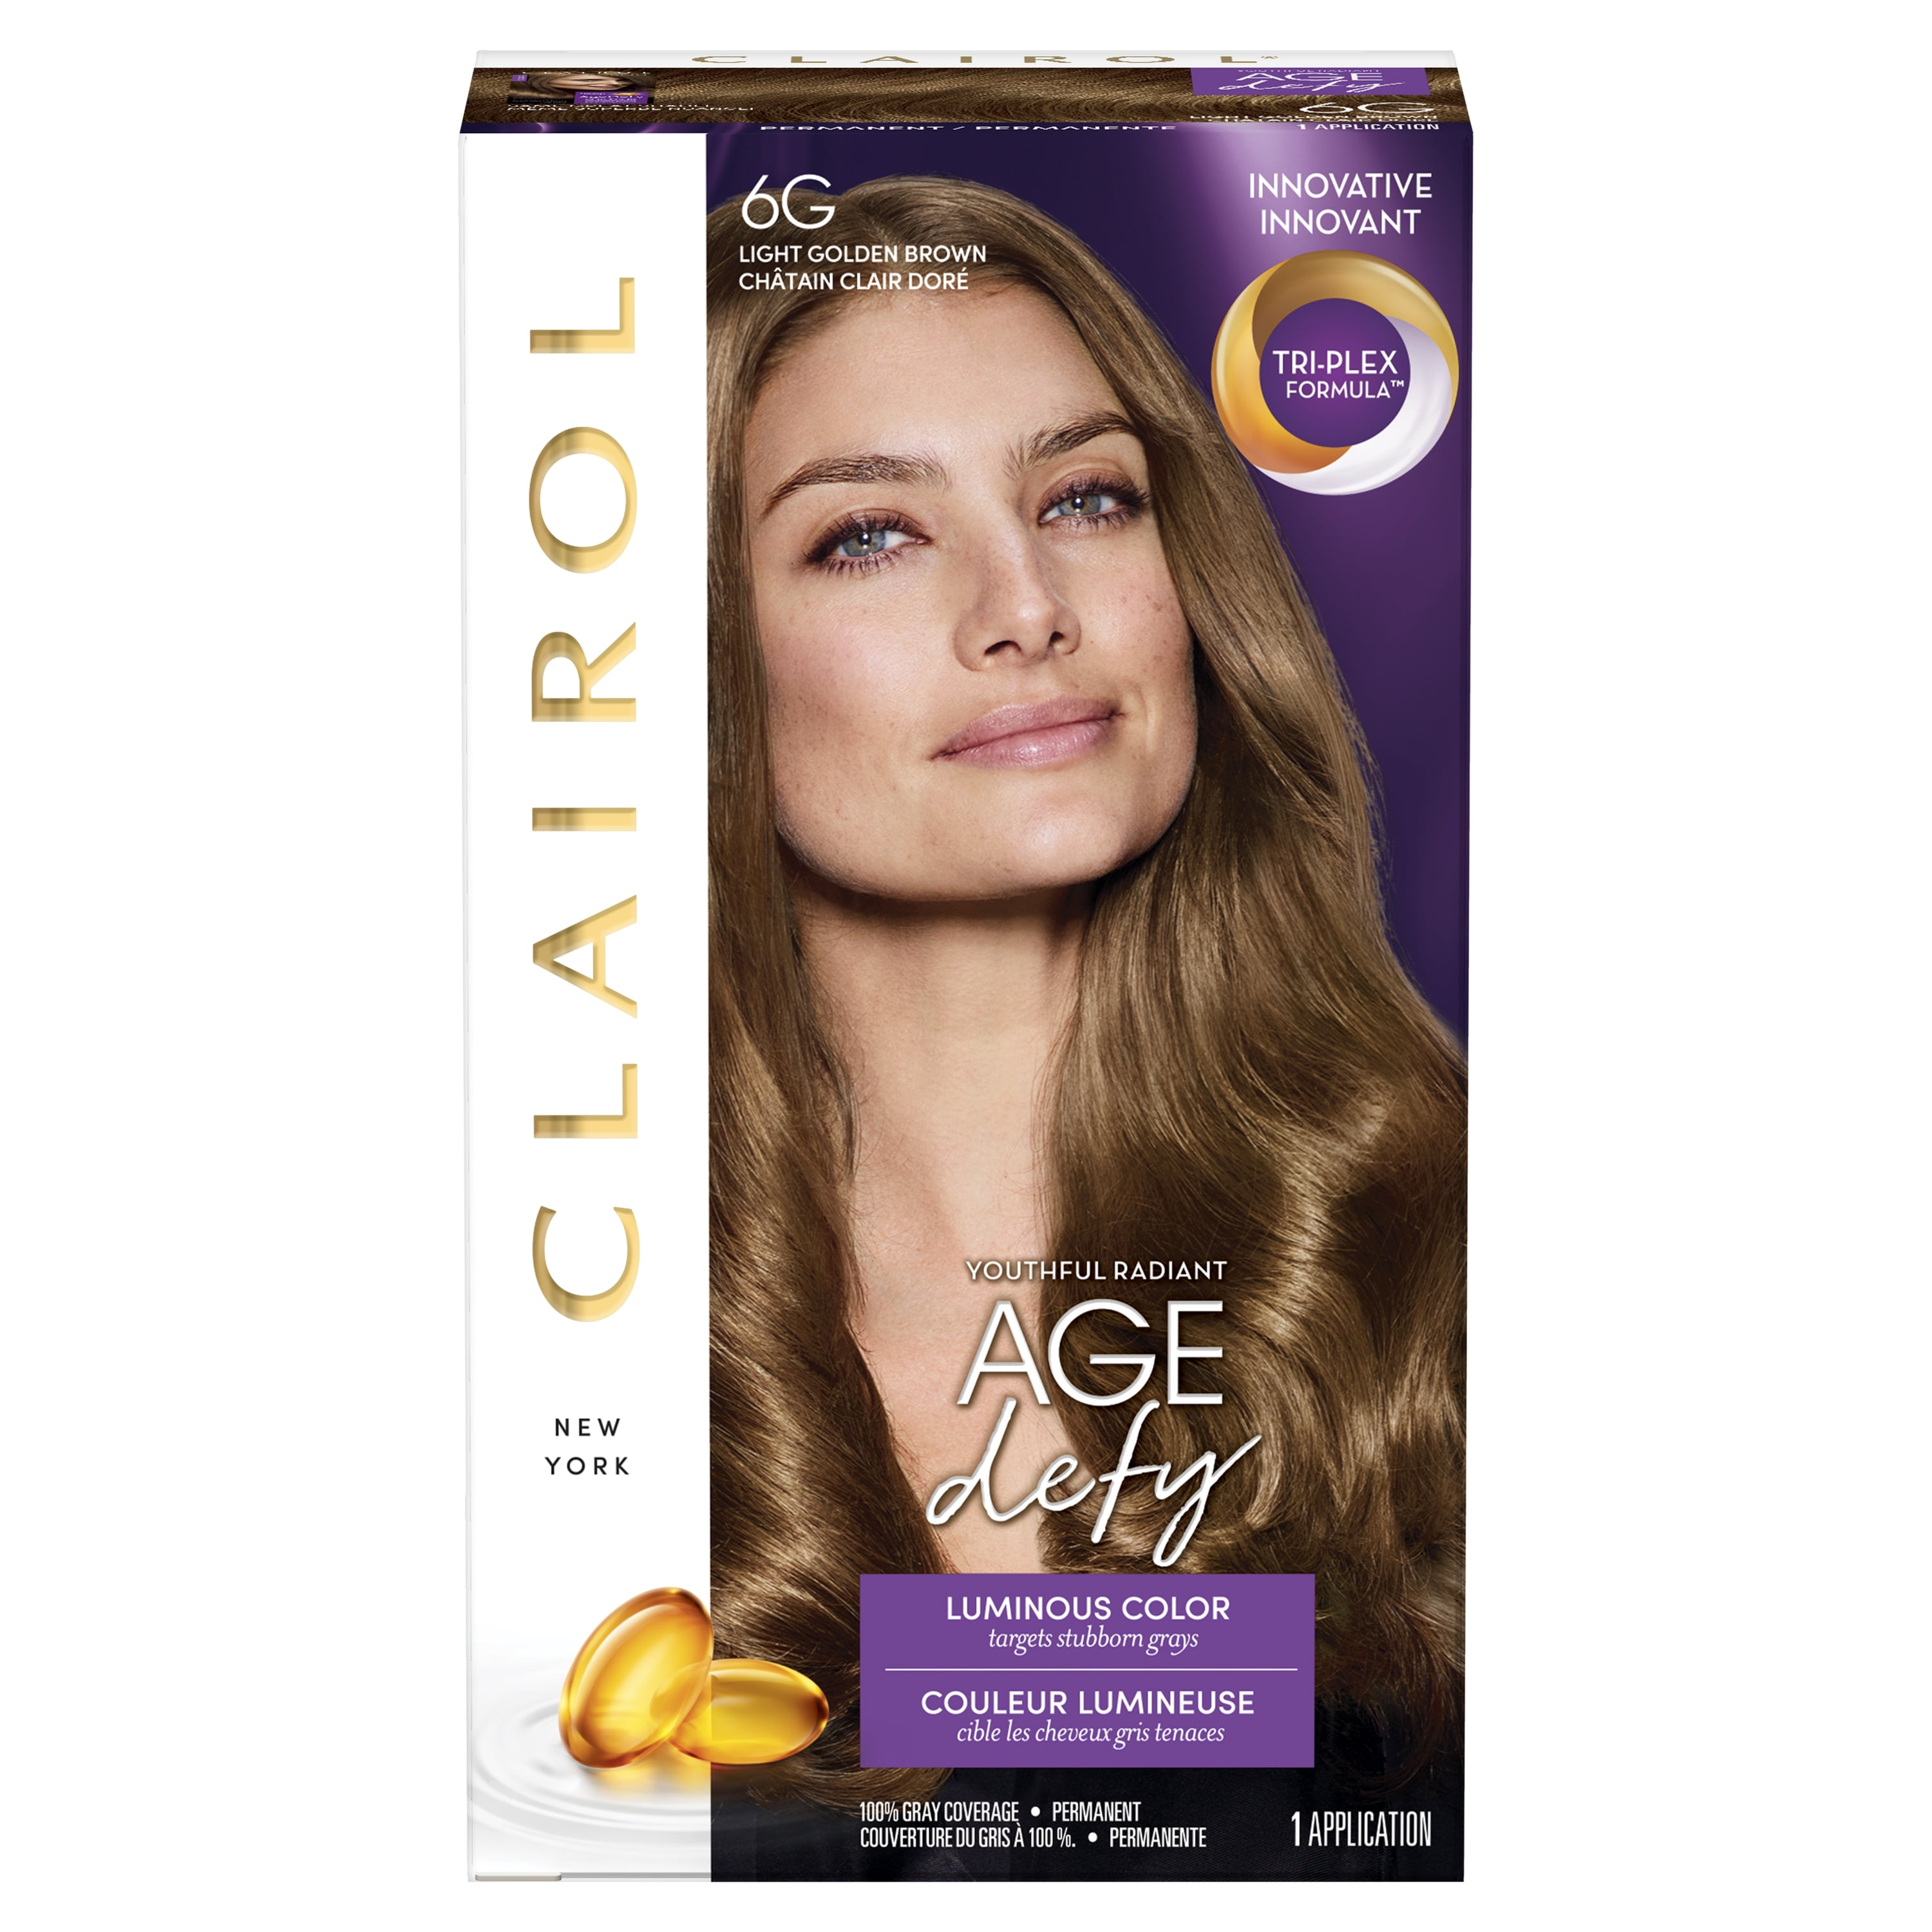 Clairol Age Defying Permanent Hair Dye Creme Tri Plex Formula Hair Color 6g Light Golden Brown